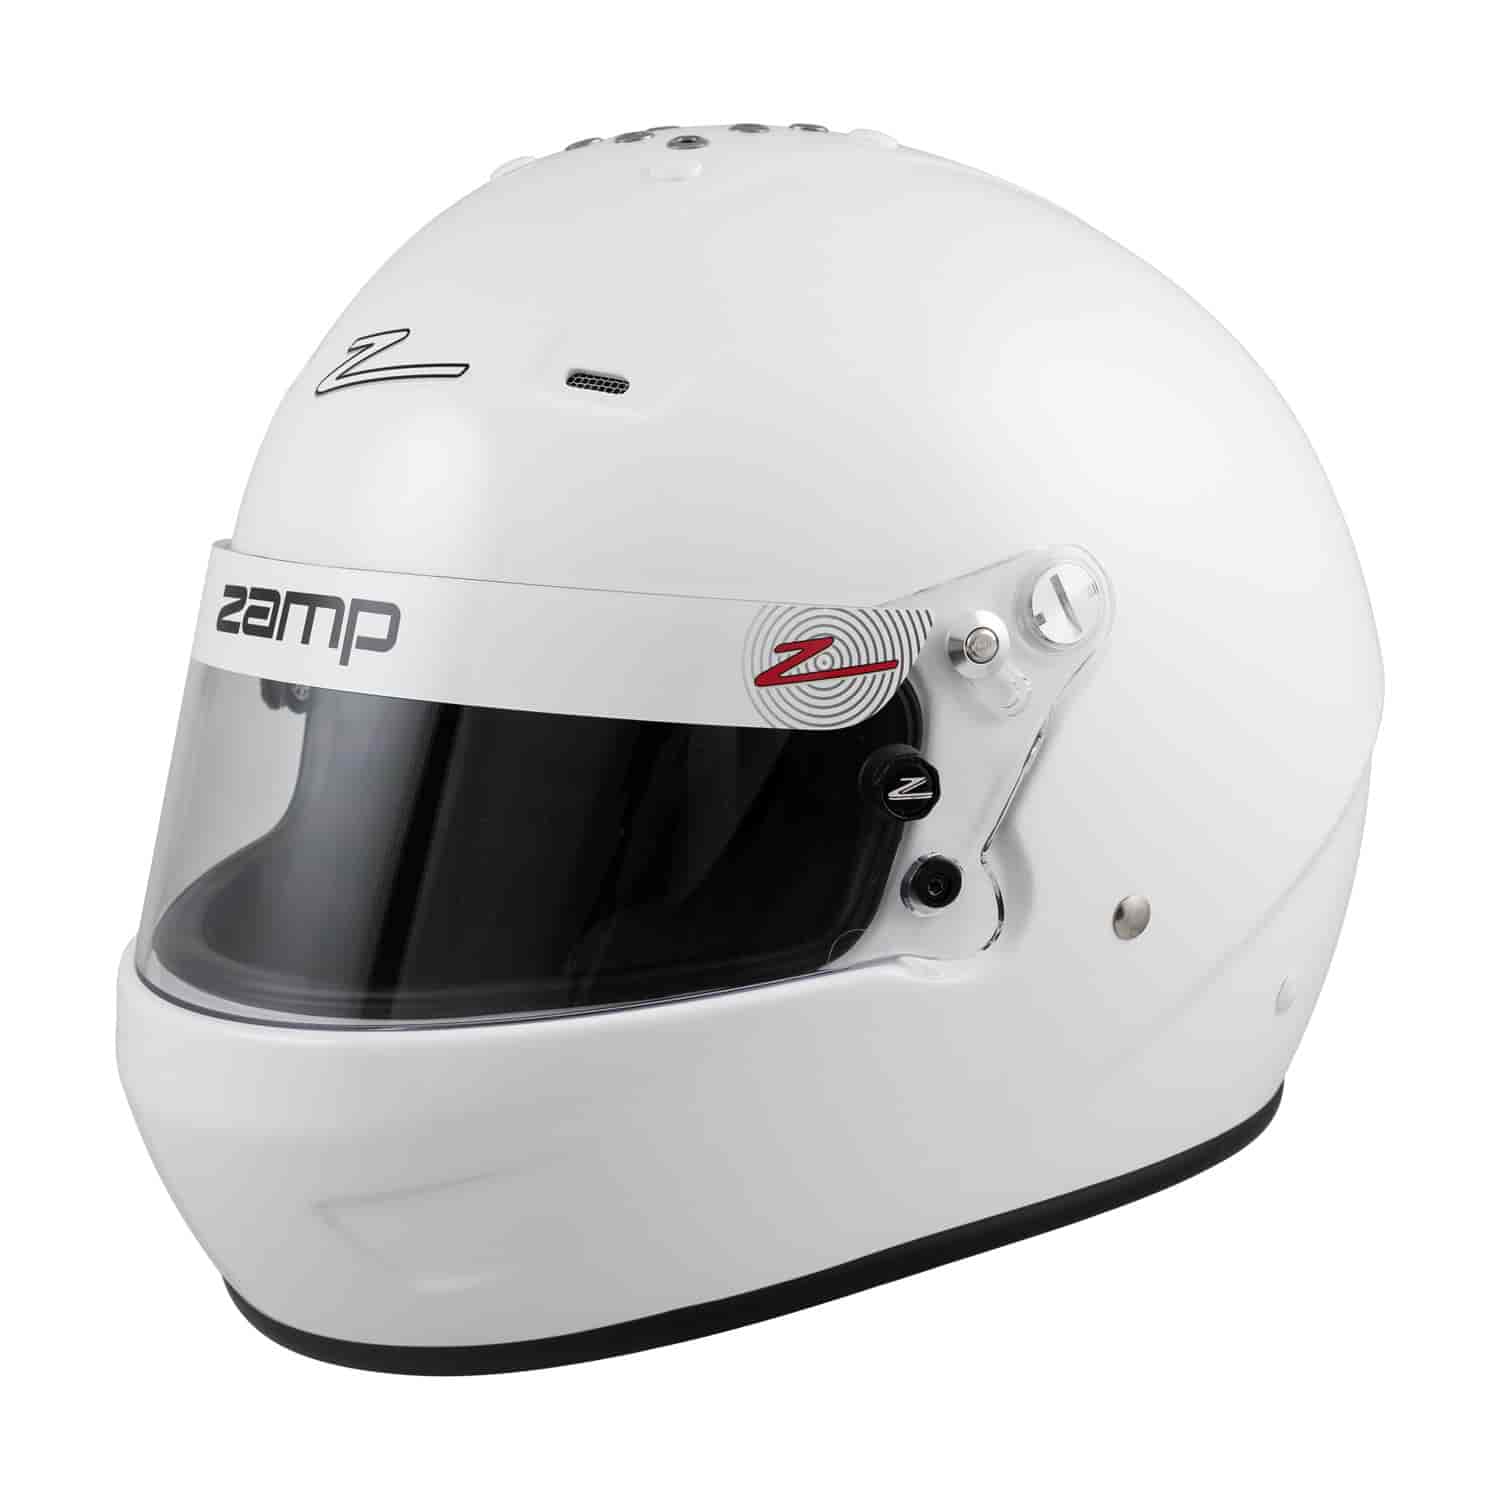 Zamp RZ-56 SA2020 Racing Helmets